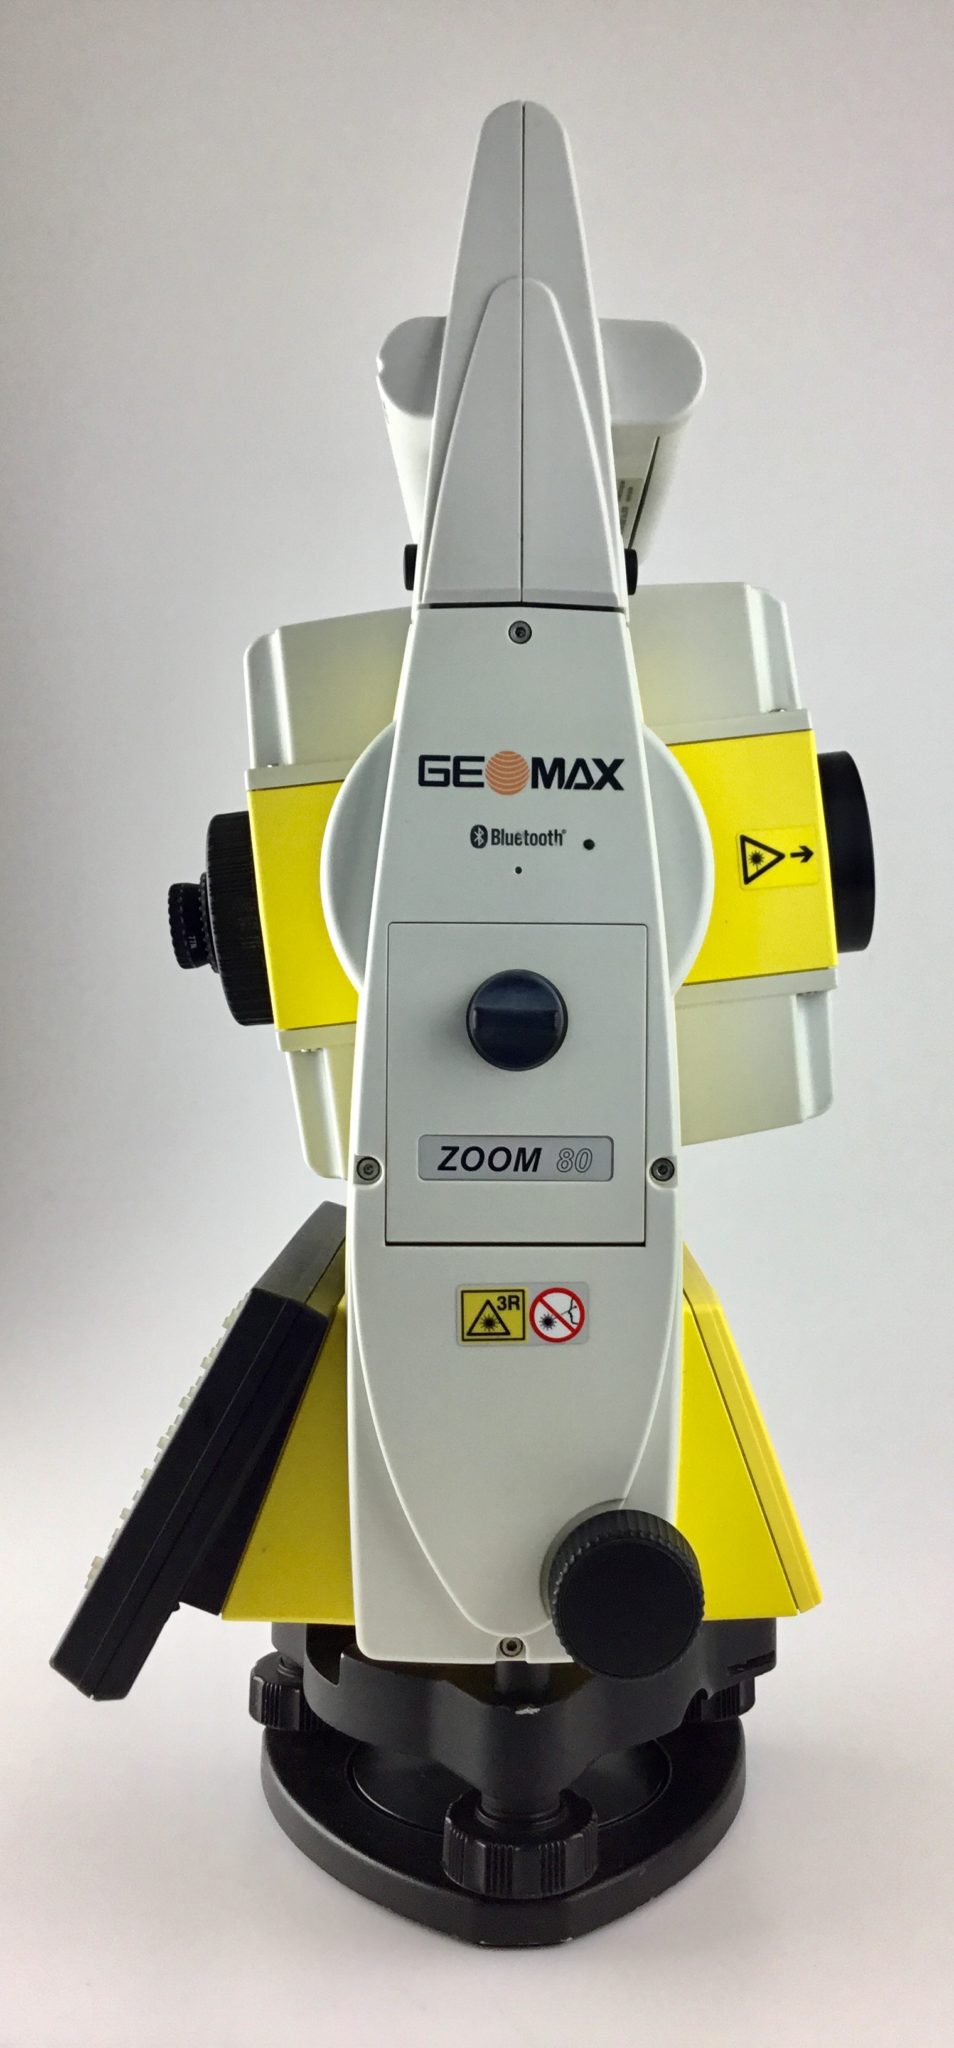 Geomax Zoom80